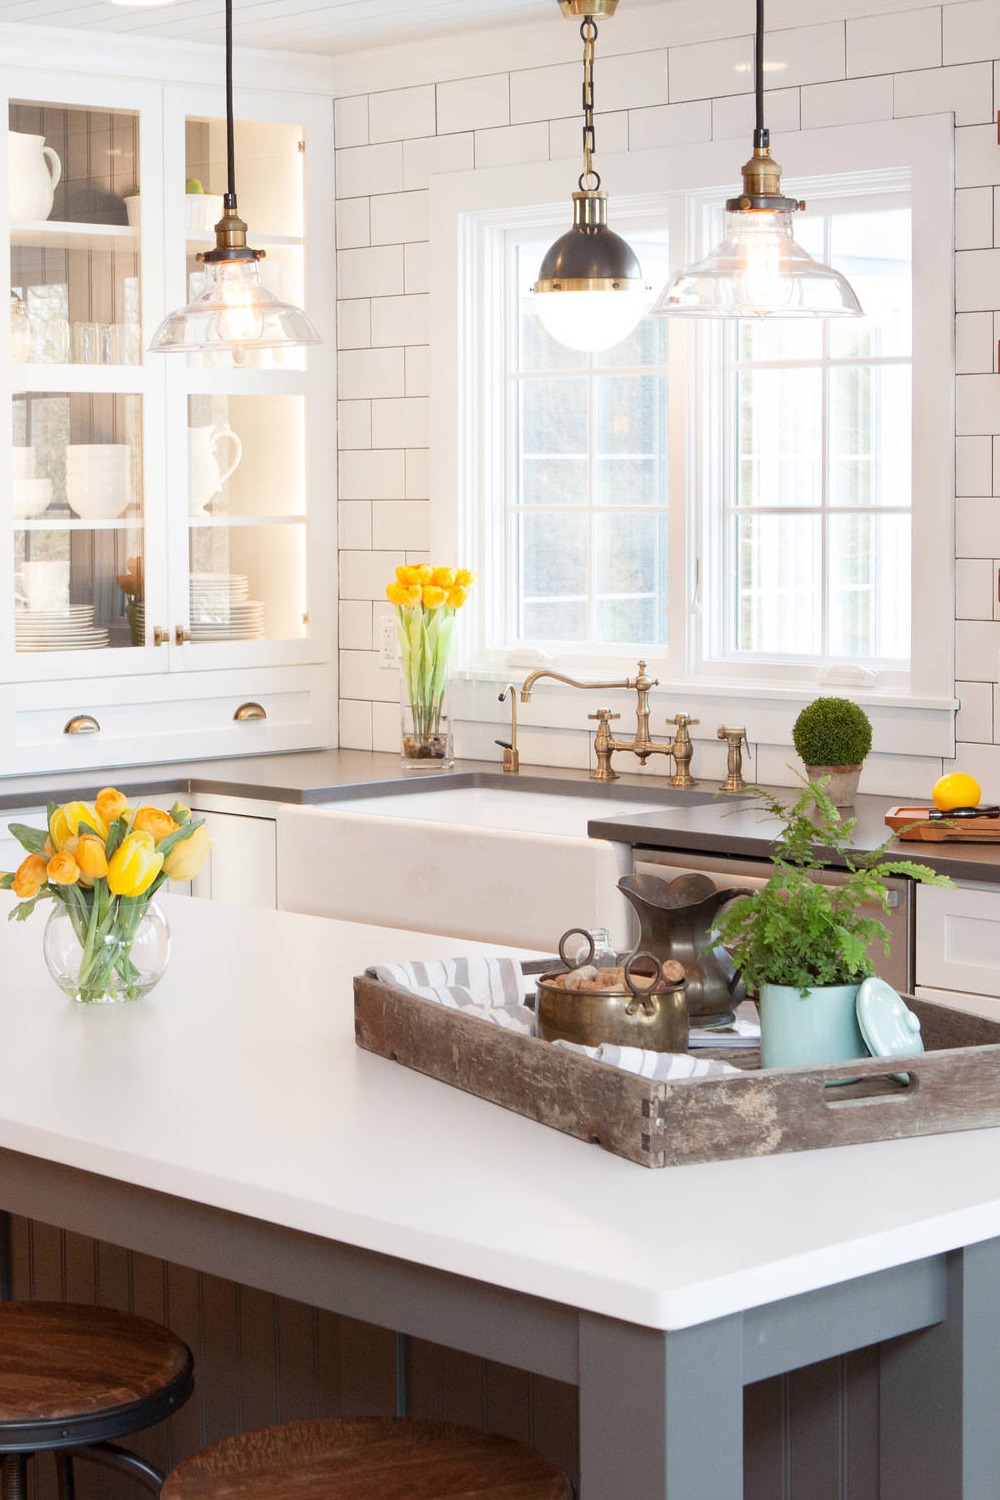 White Subway Tile Backsplash Quartz Countertops Farmhouse Sink Cabinets Wood Floor